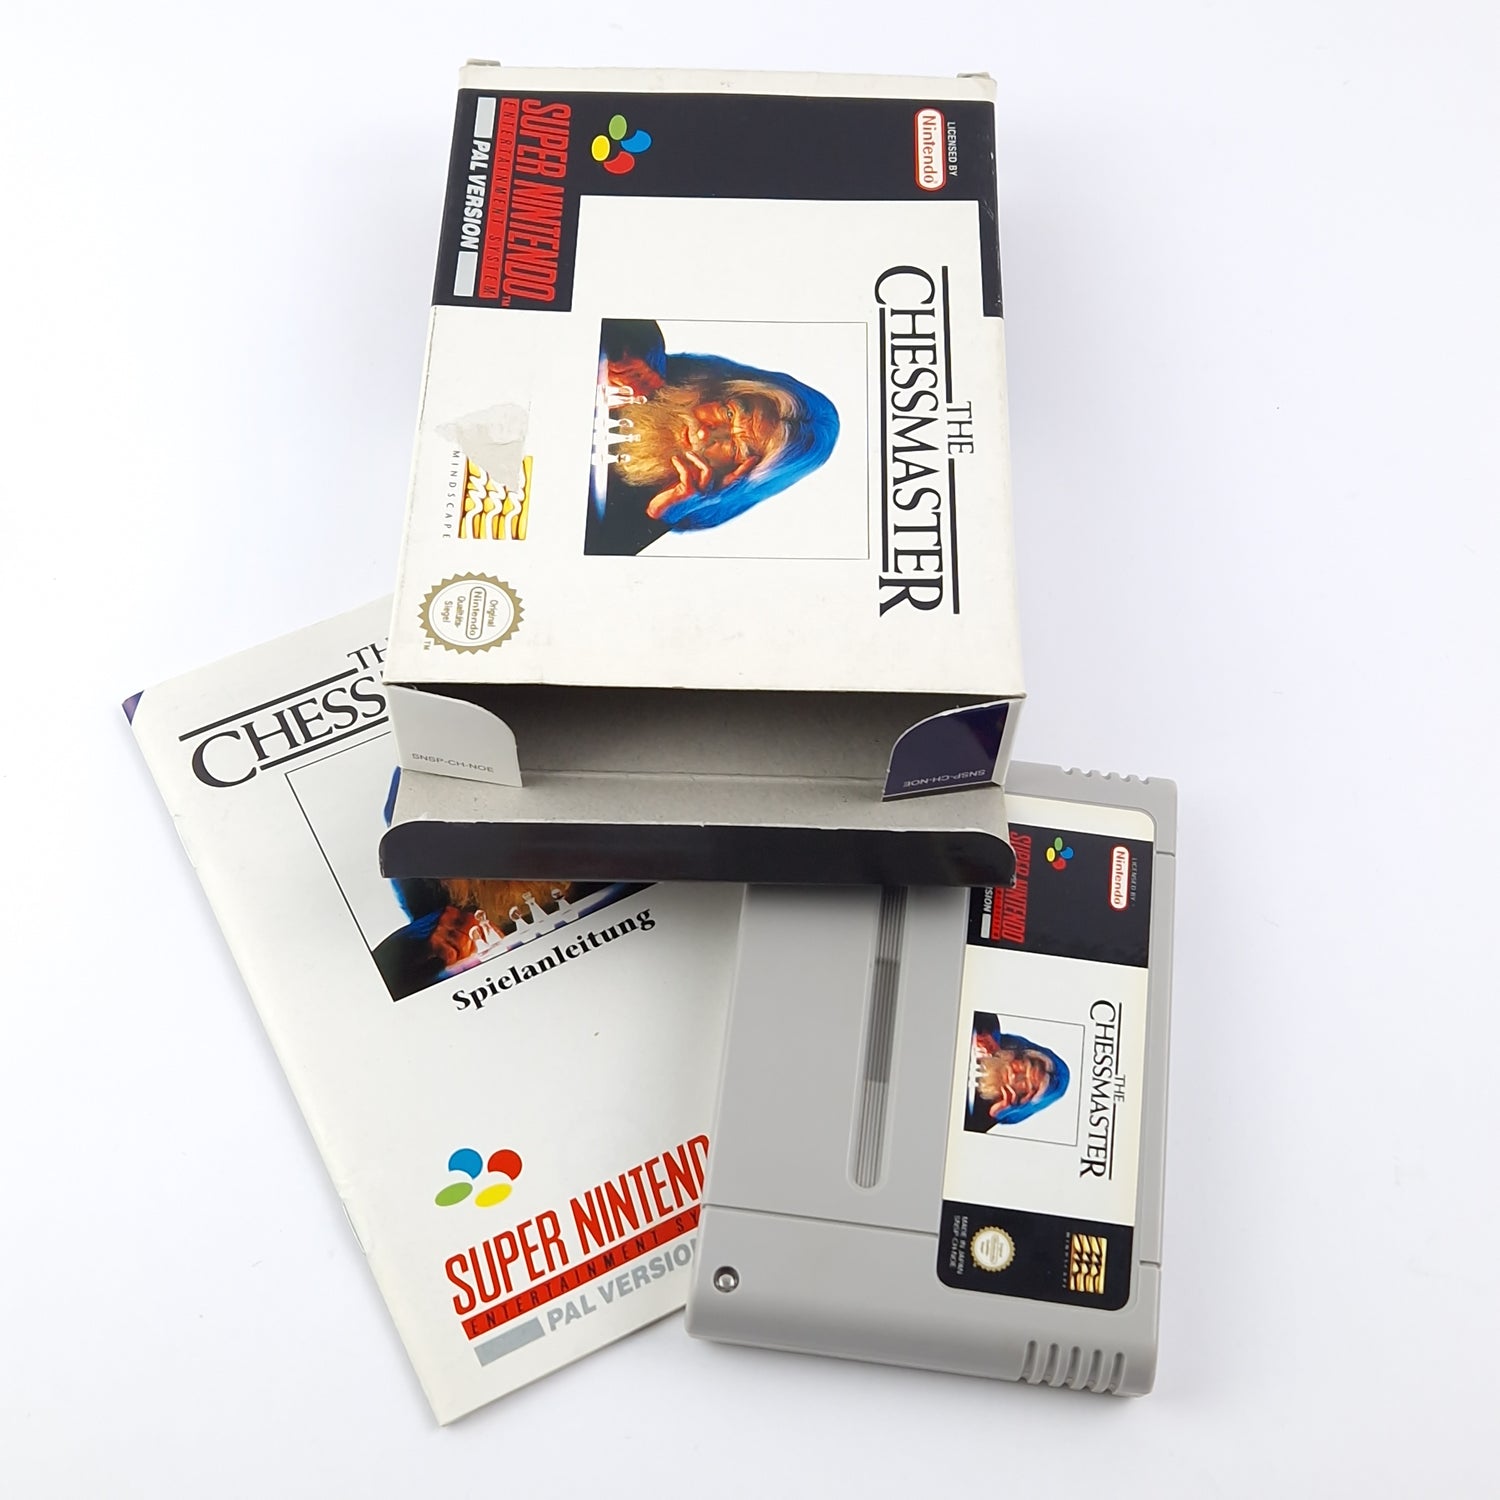 Super Nintendo game: The Chessmaster - OVP instructions PAL NOE | SNES game